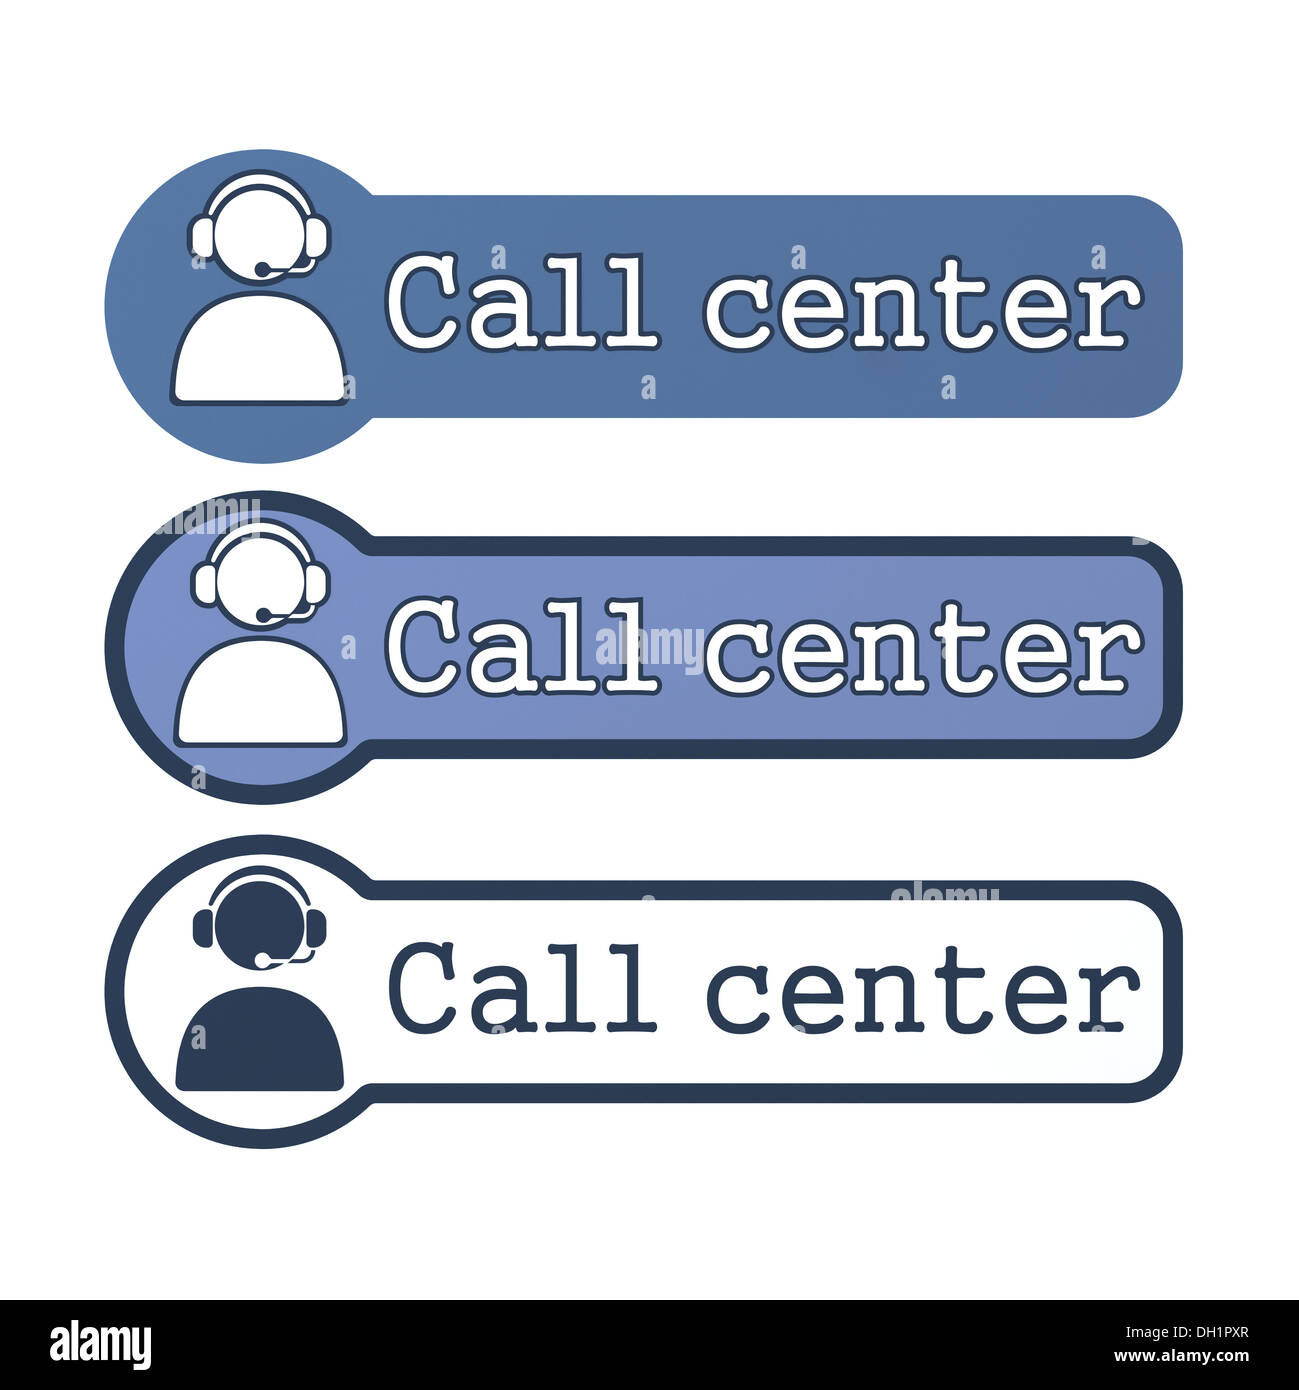 Website Element: 'Call Center' Stock Photo